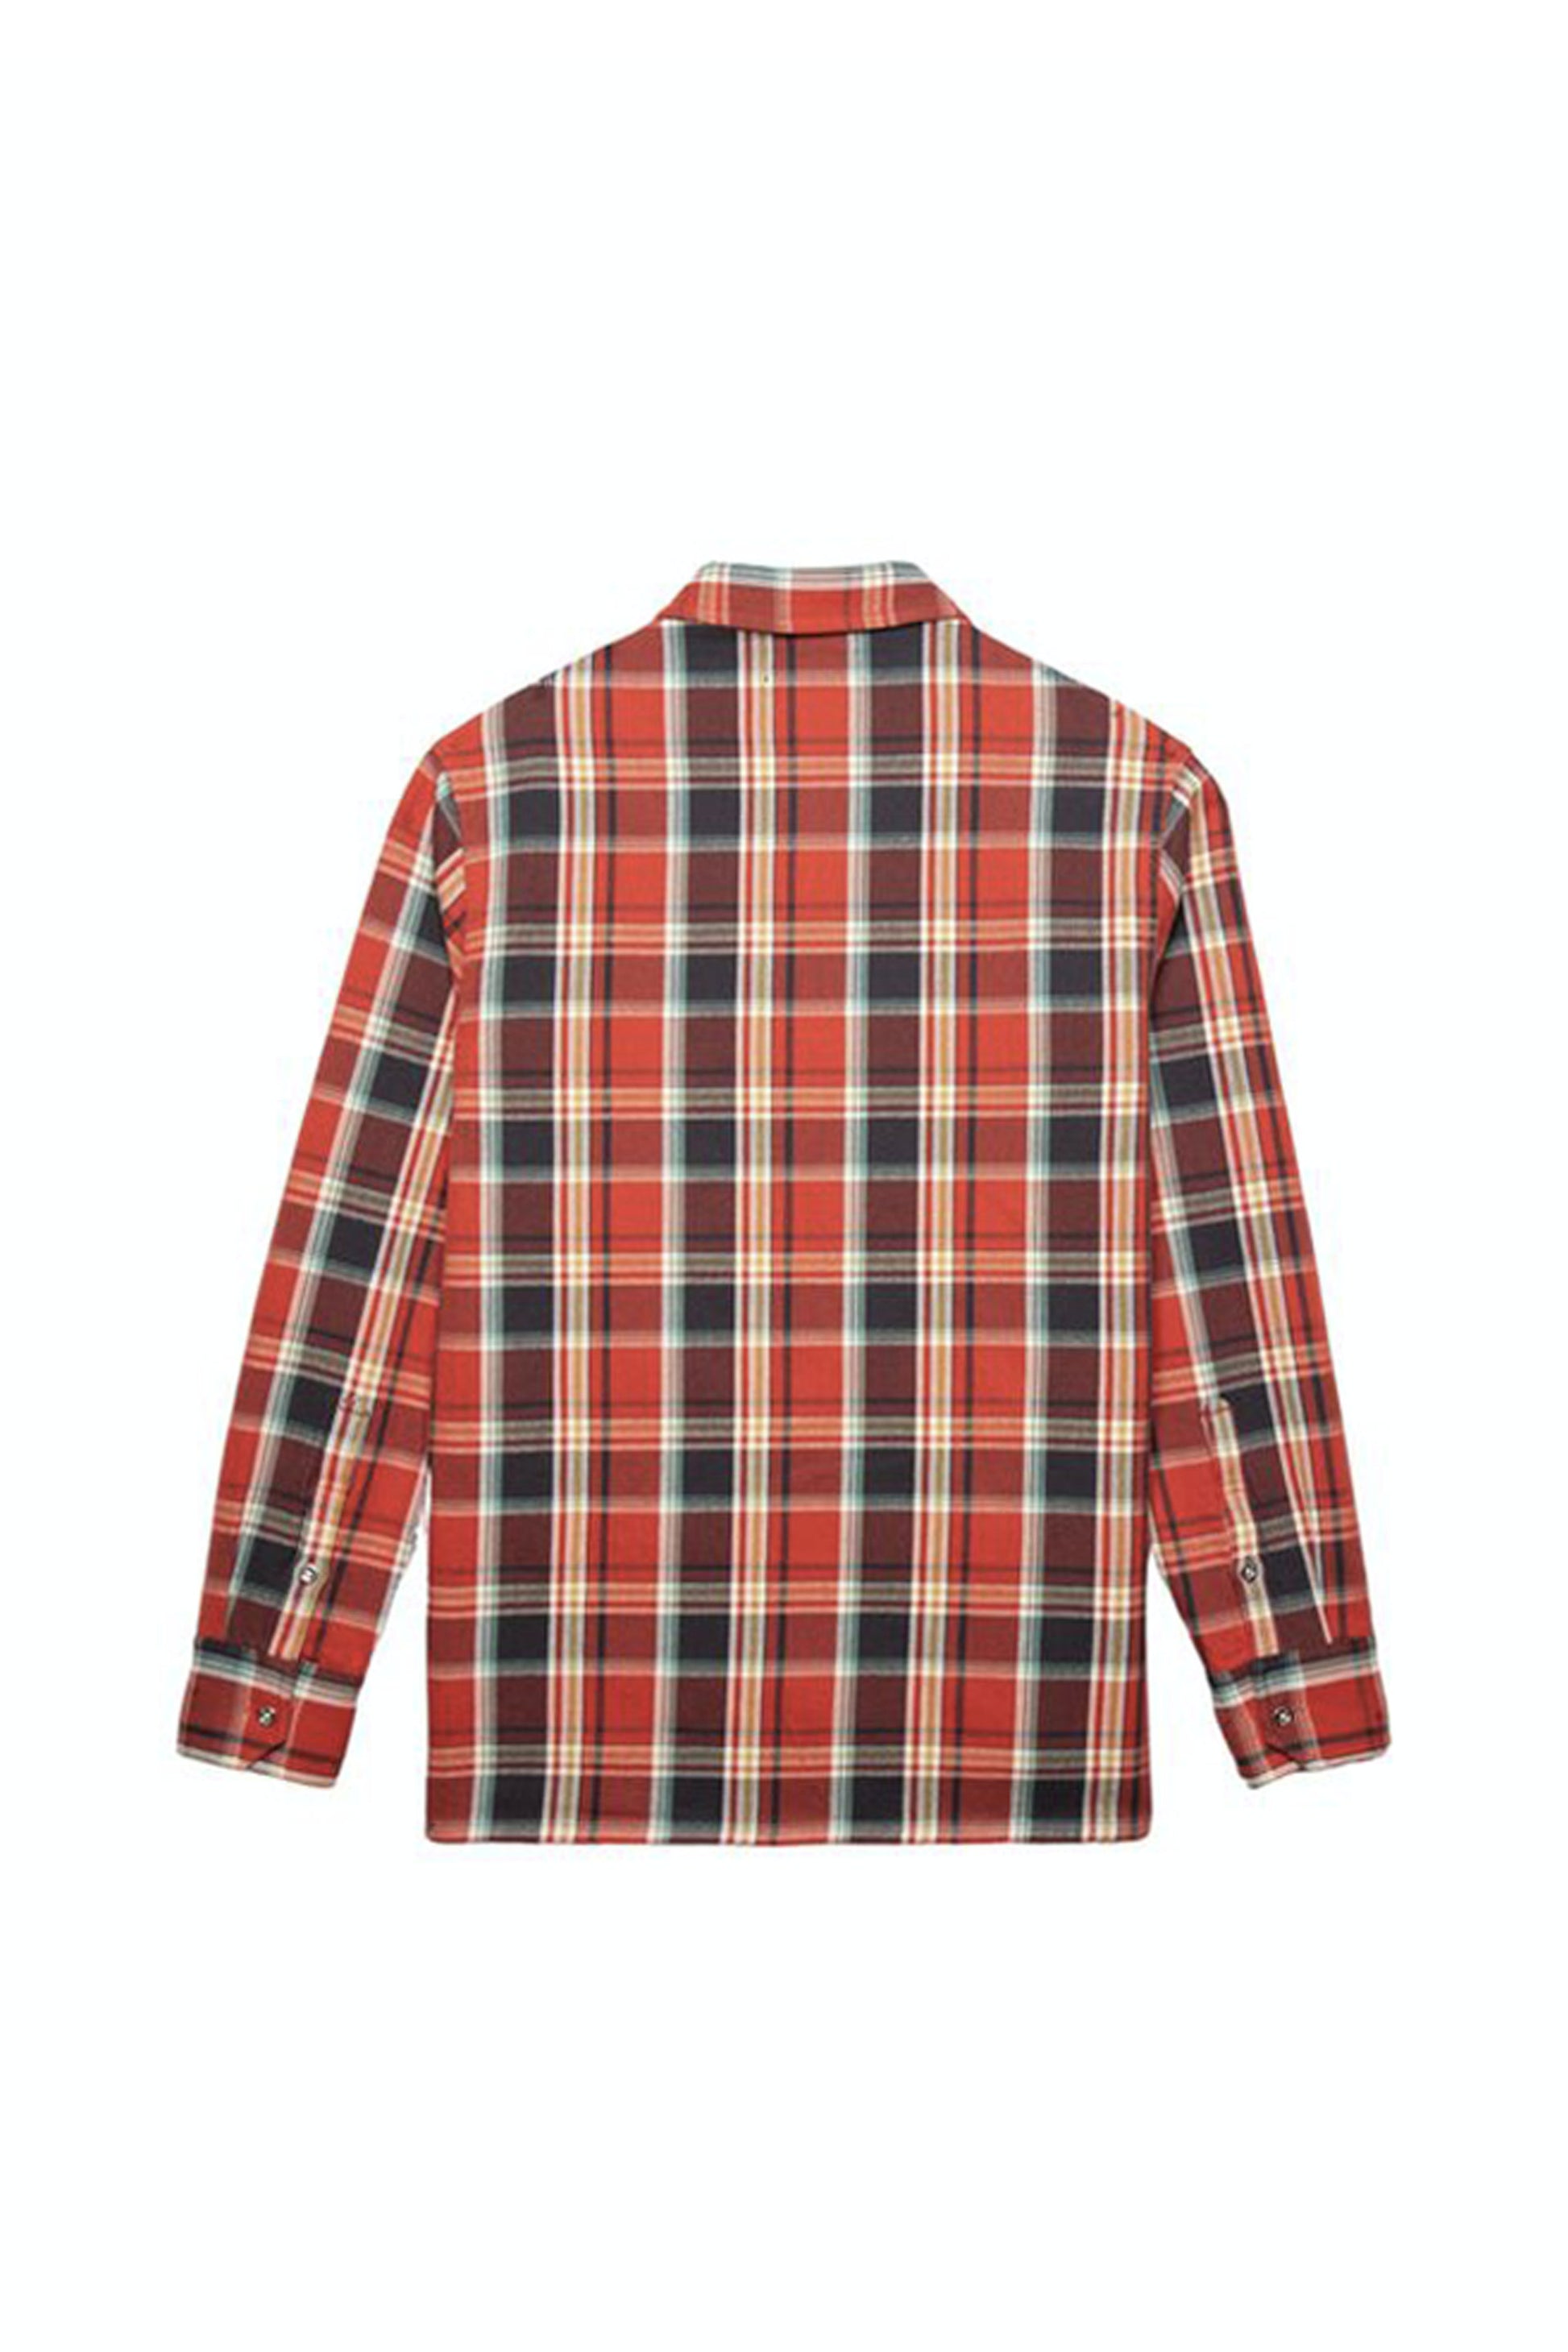 PURPLE BRAND - Men's Long Sleeve Shirt - Style No. P309 - Canvas Plaid Red - Back